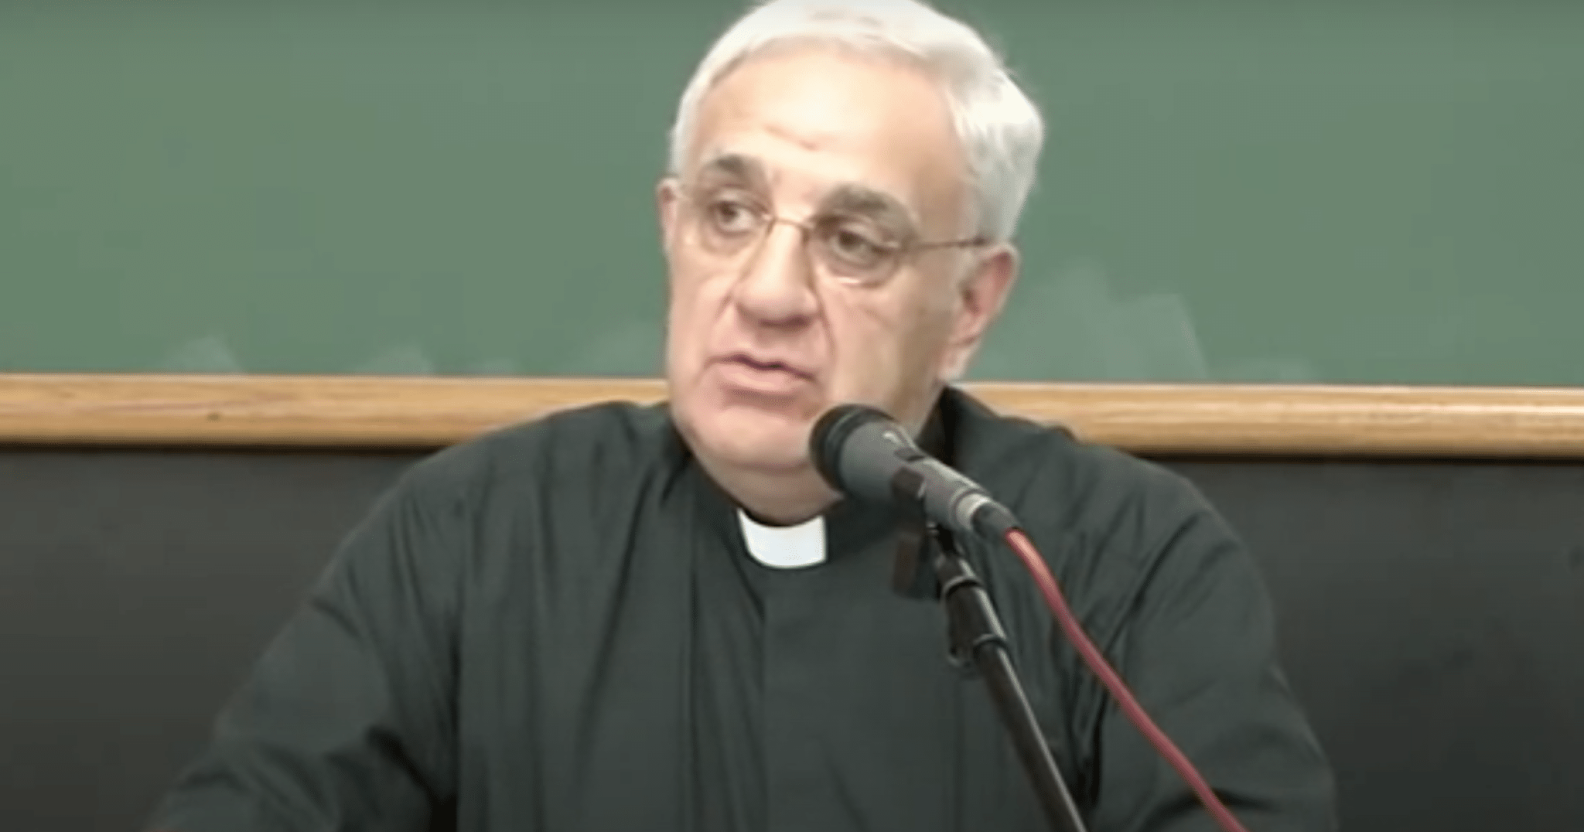 vatican adviser abuse gay Tony Anatrella